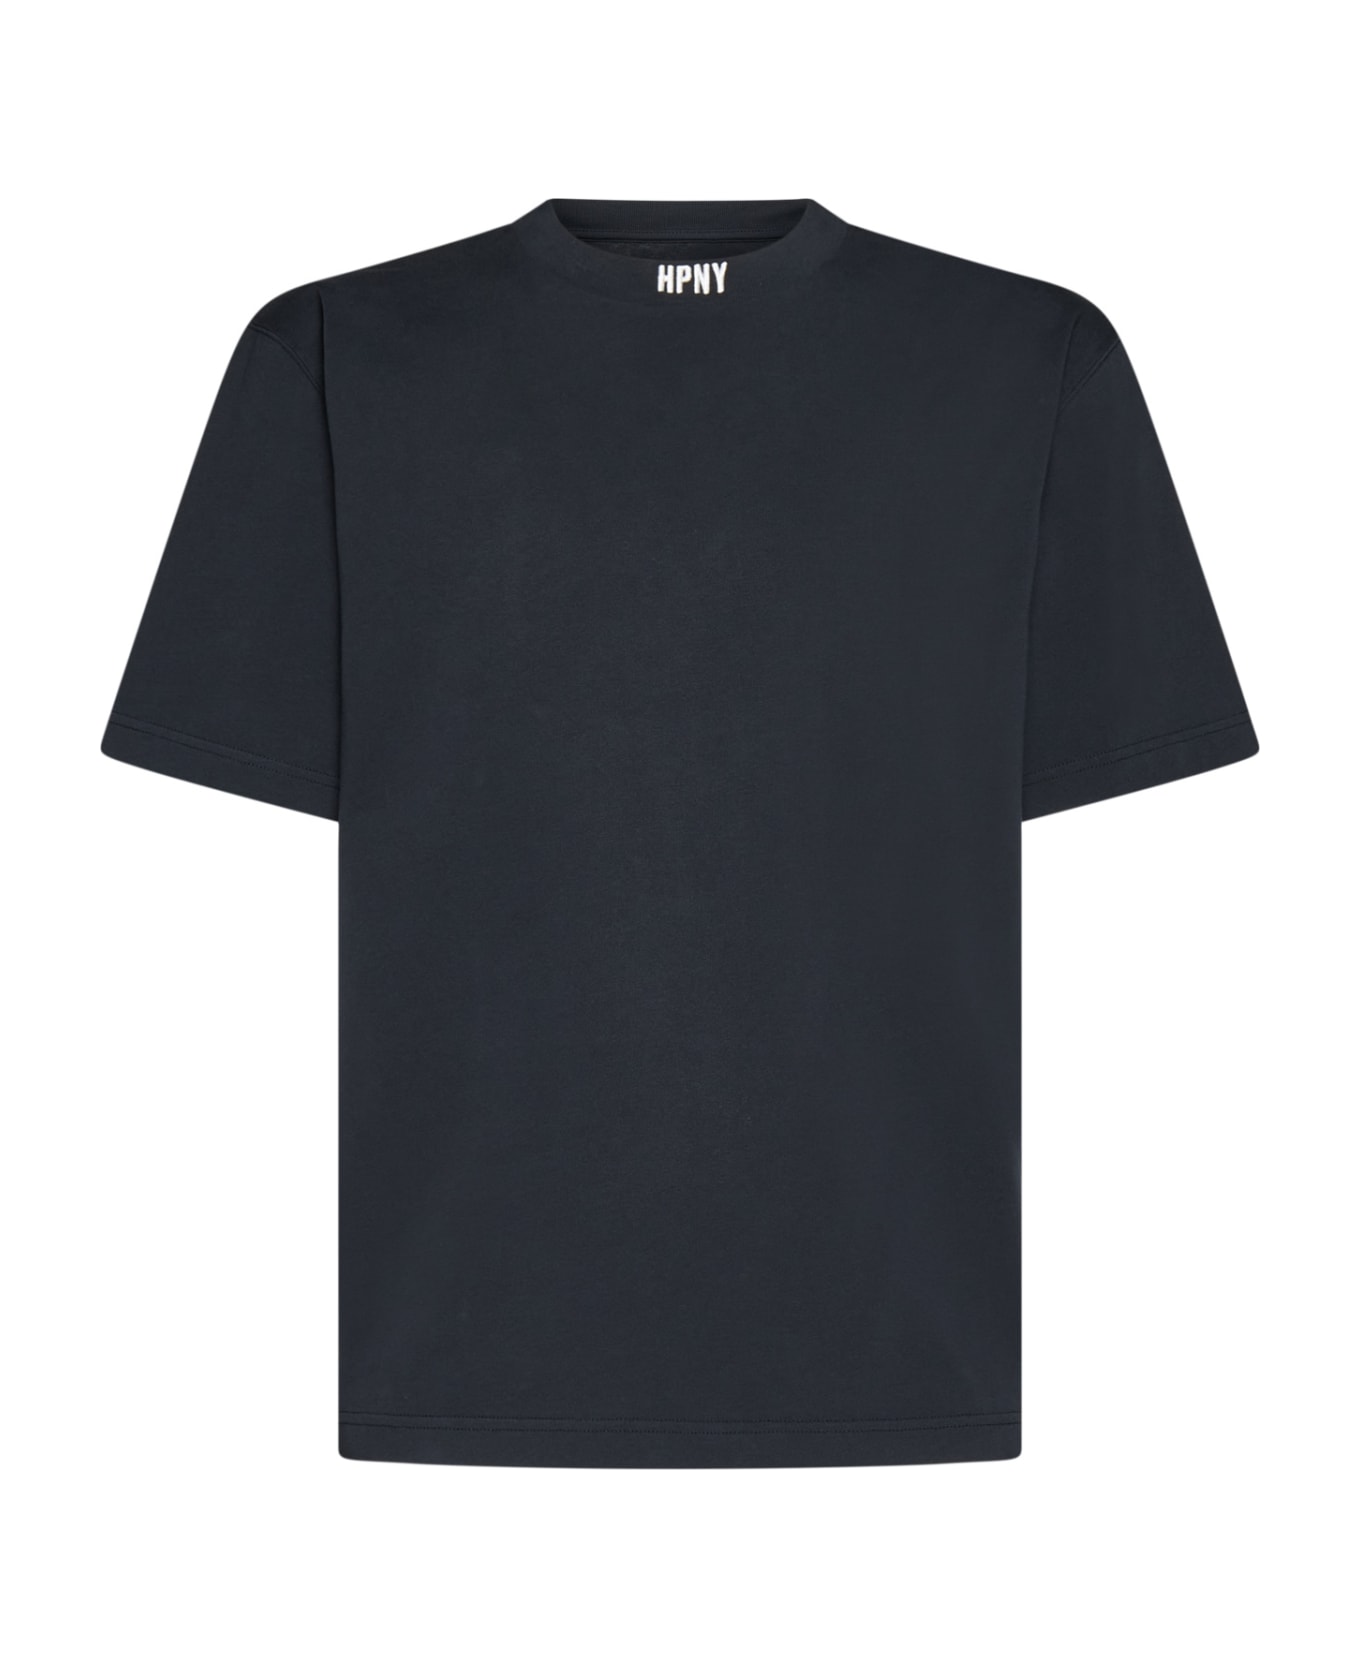 HERON PRESTON Hpny Embroidered T-shirt - Black